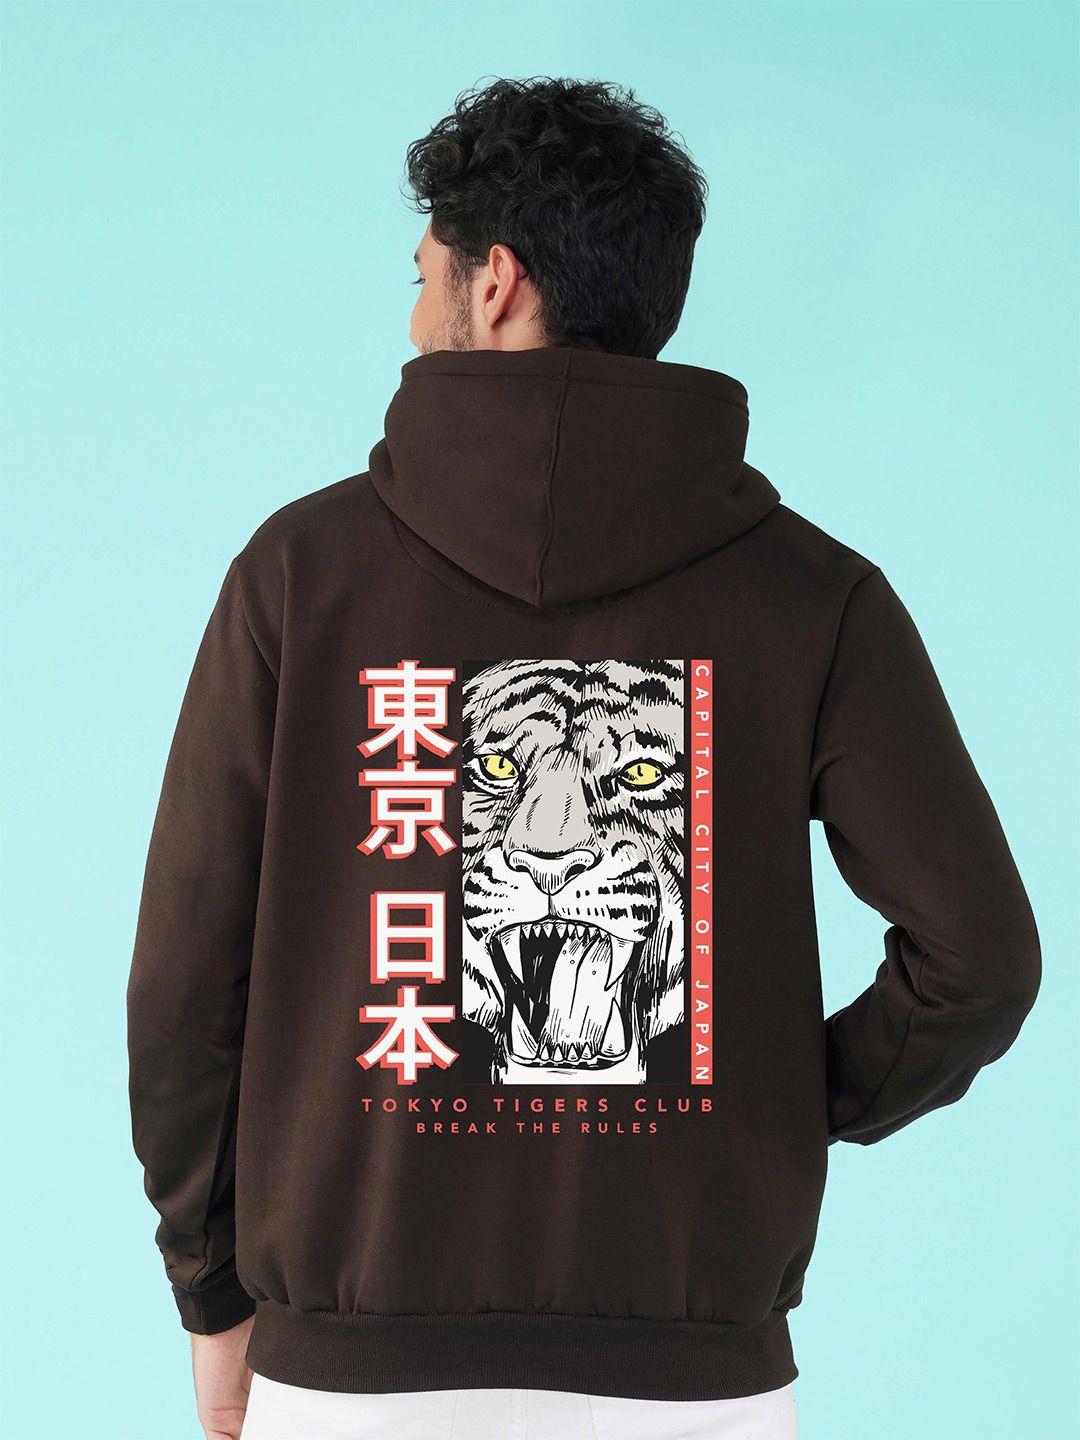 nusyl graphic printed hooded fleece pullover sweatshirt